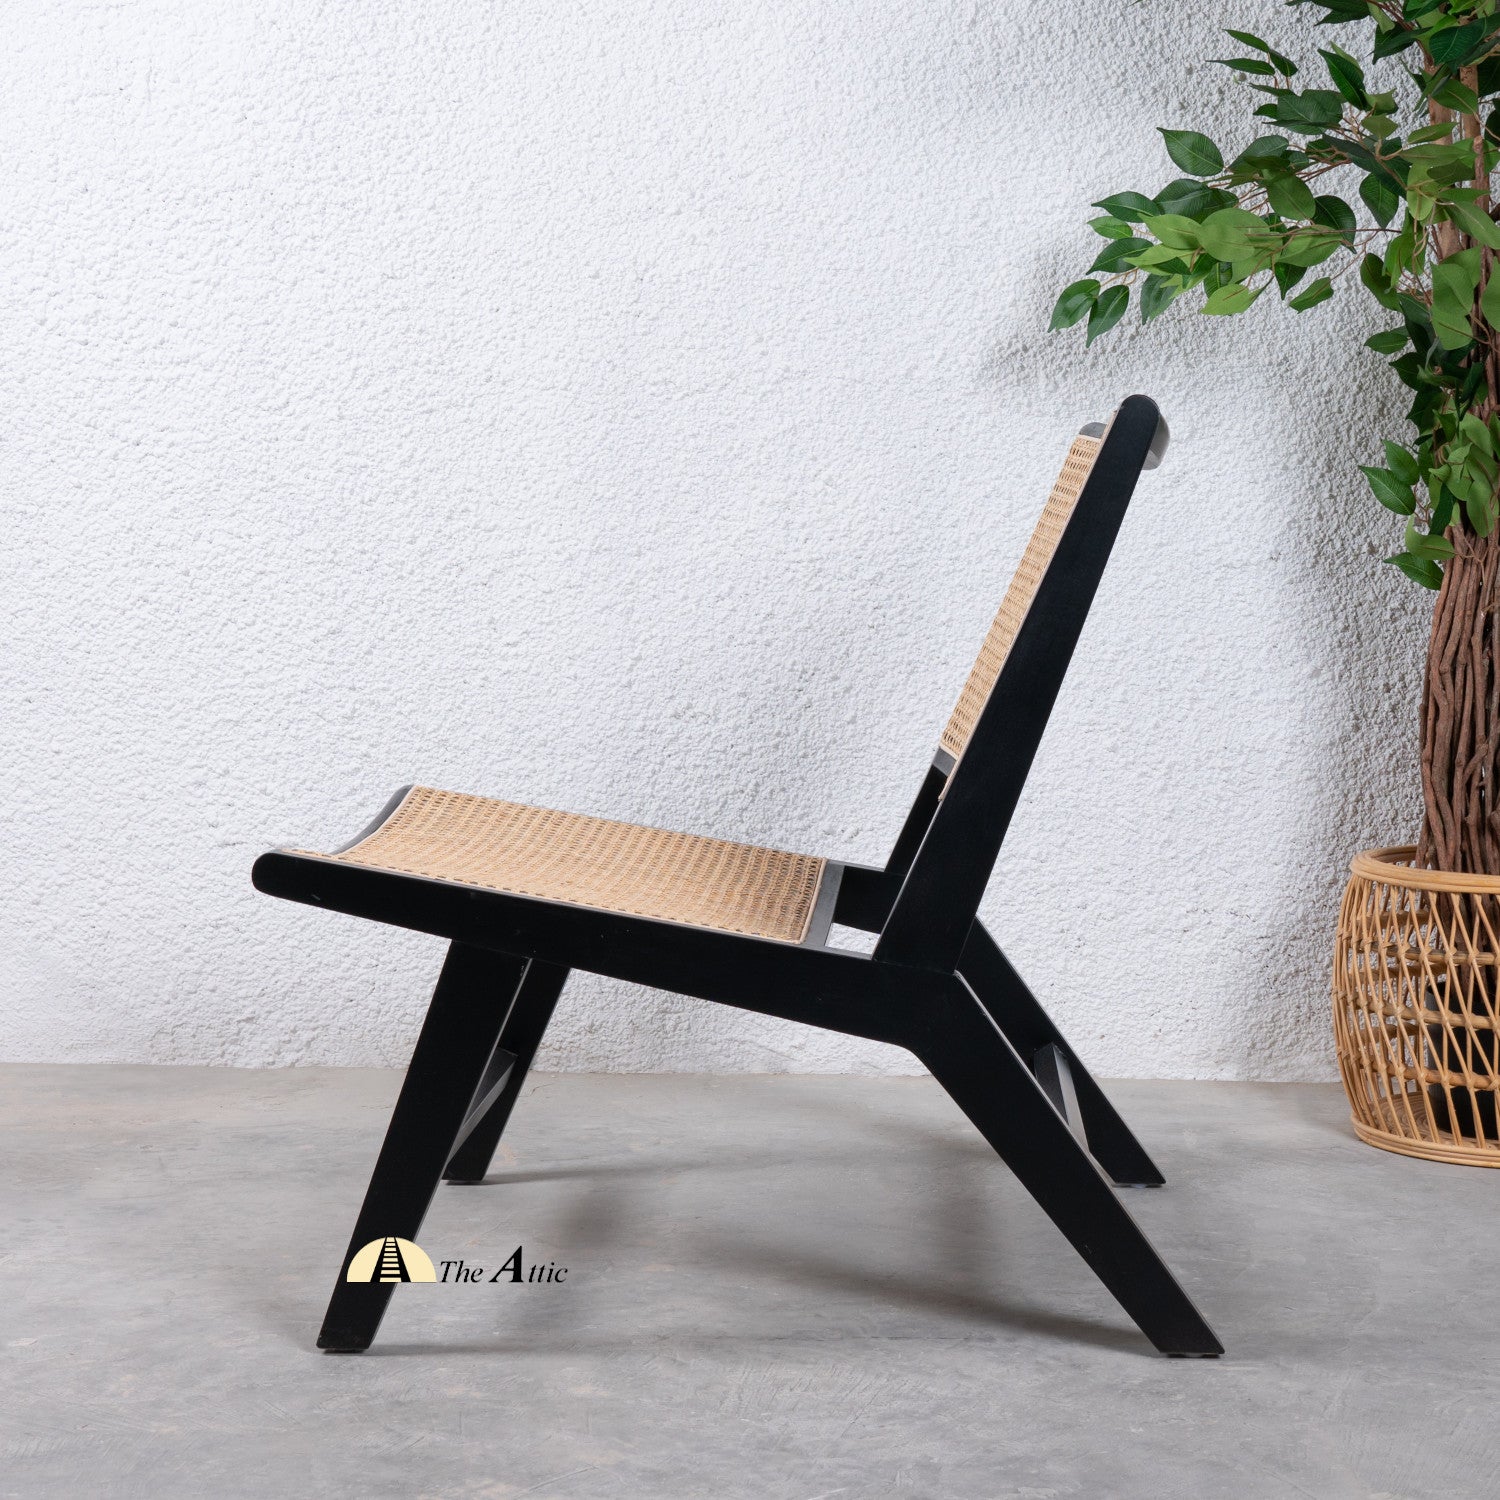 Kanha Rattan and Wood Chair; Natural Rattan Wicker Furniture; Black Lounge Chair - The Attic Dubai